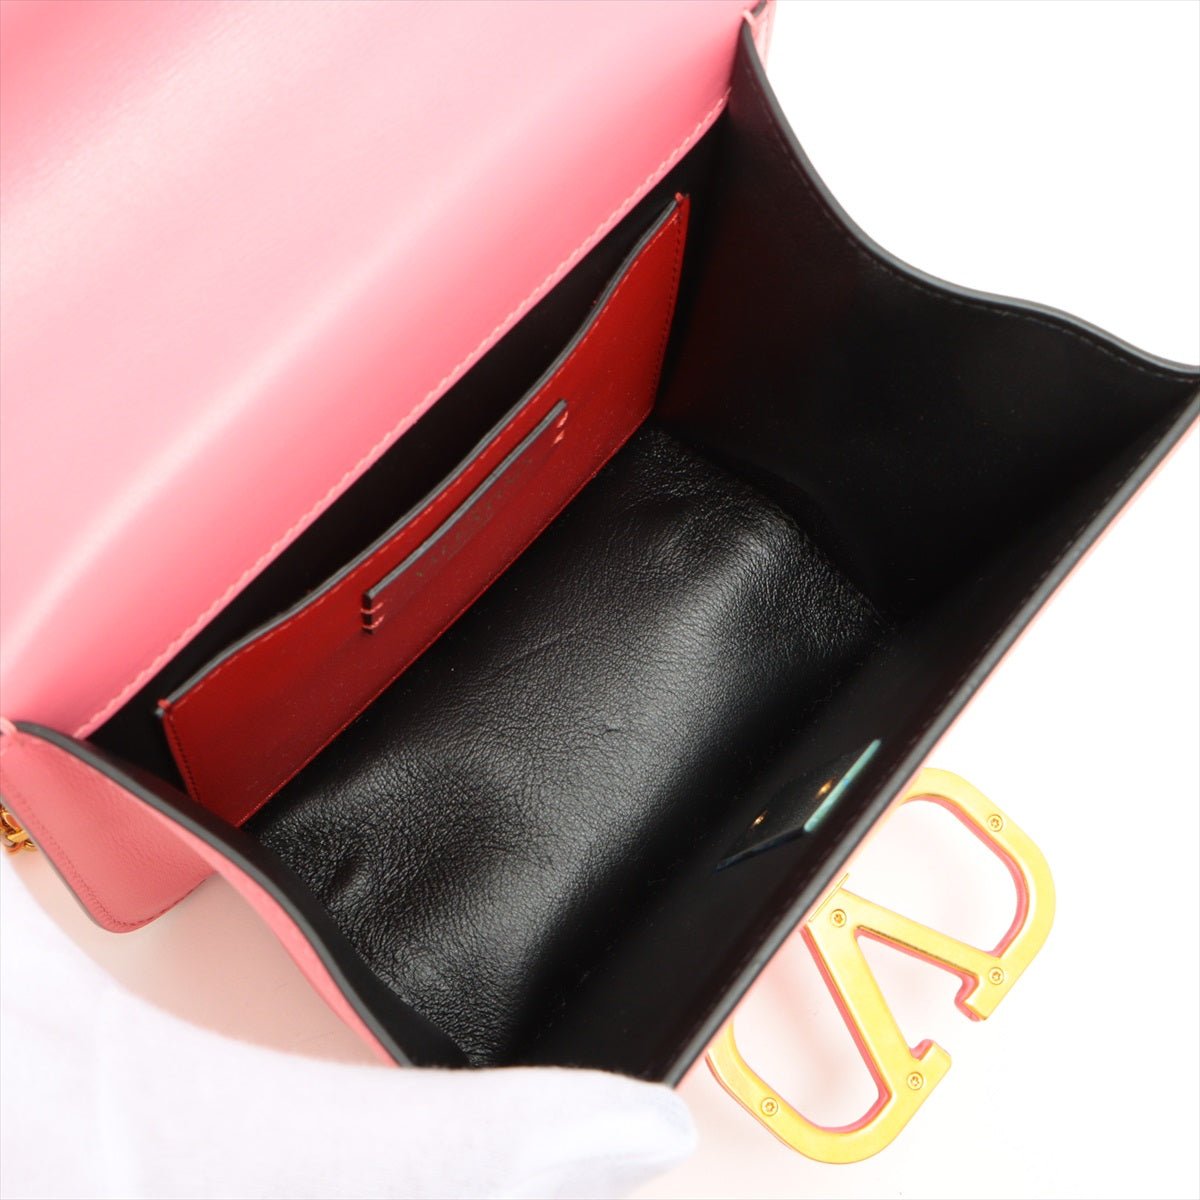 Valentino Garavani Mini Vsling Grainy Calfskin Handbag - Pink